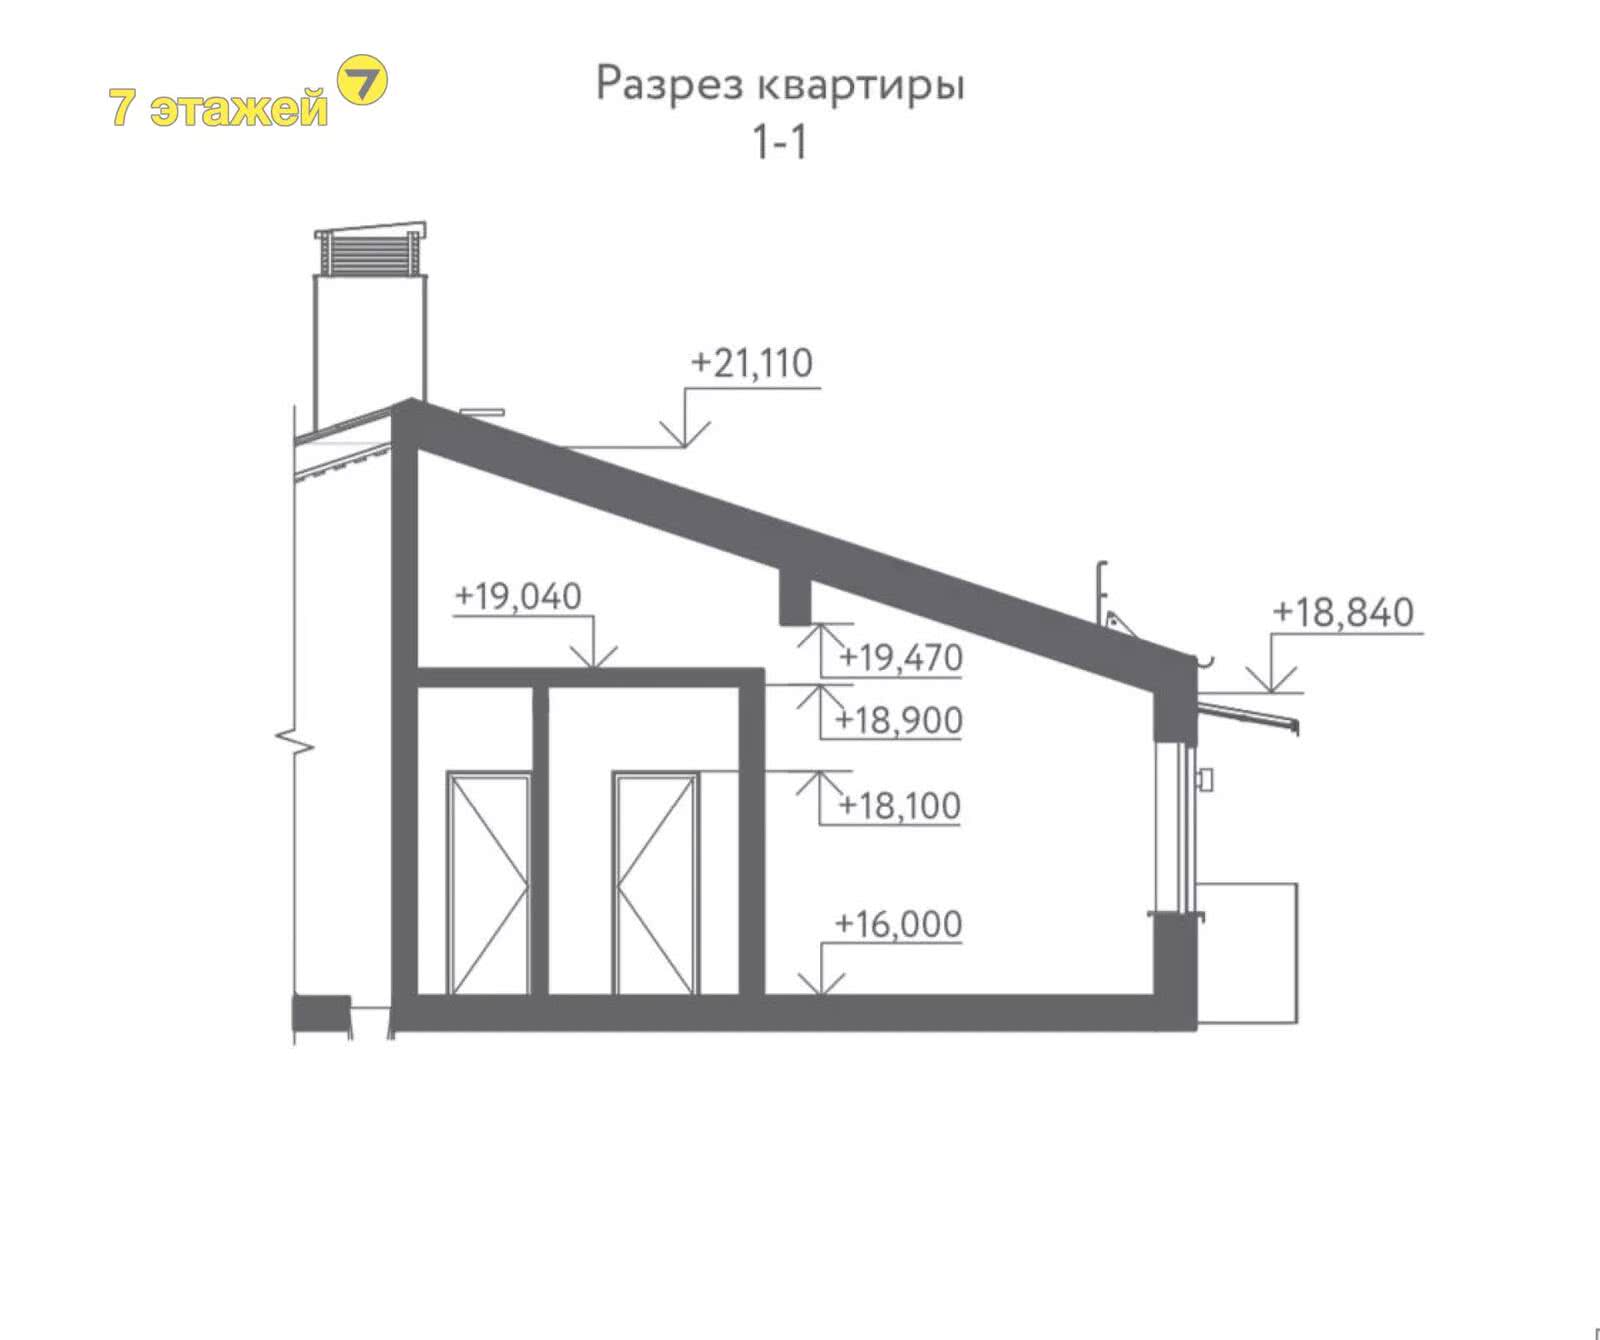 Цена продажи квартиры, Колодищи, ул. Кленовая, д. 4.5